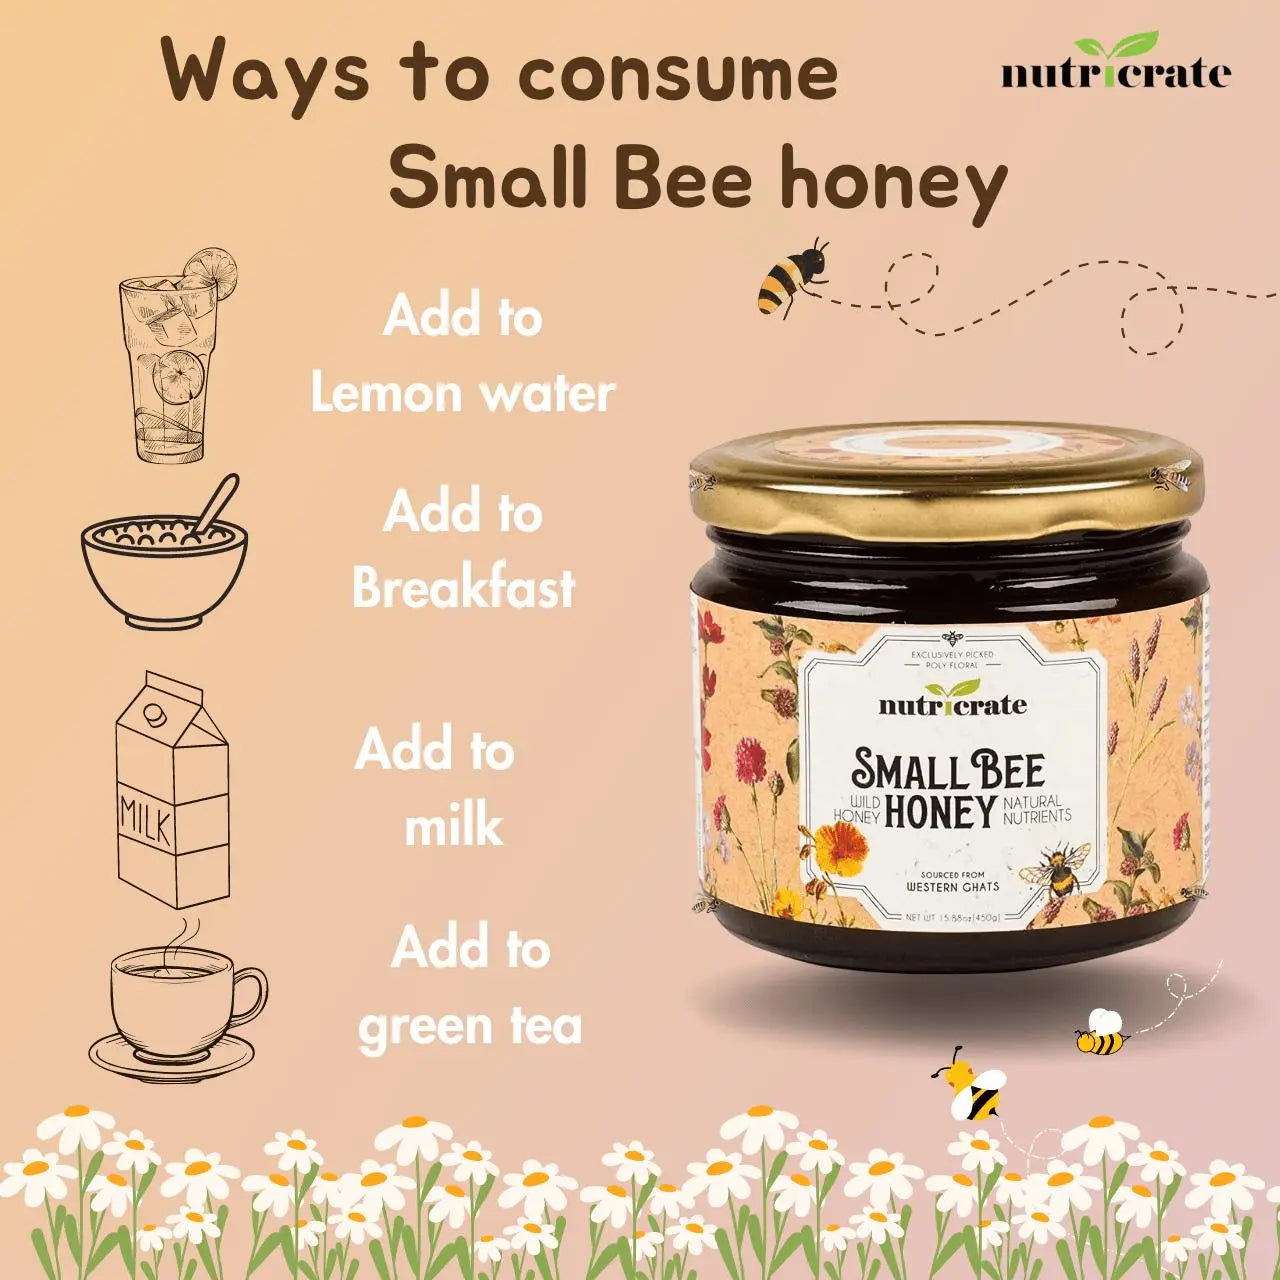 Nutricrate Pure Organic Raw Honey- Small Bee Honey 